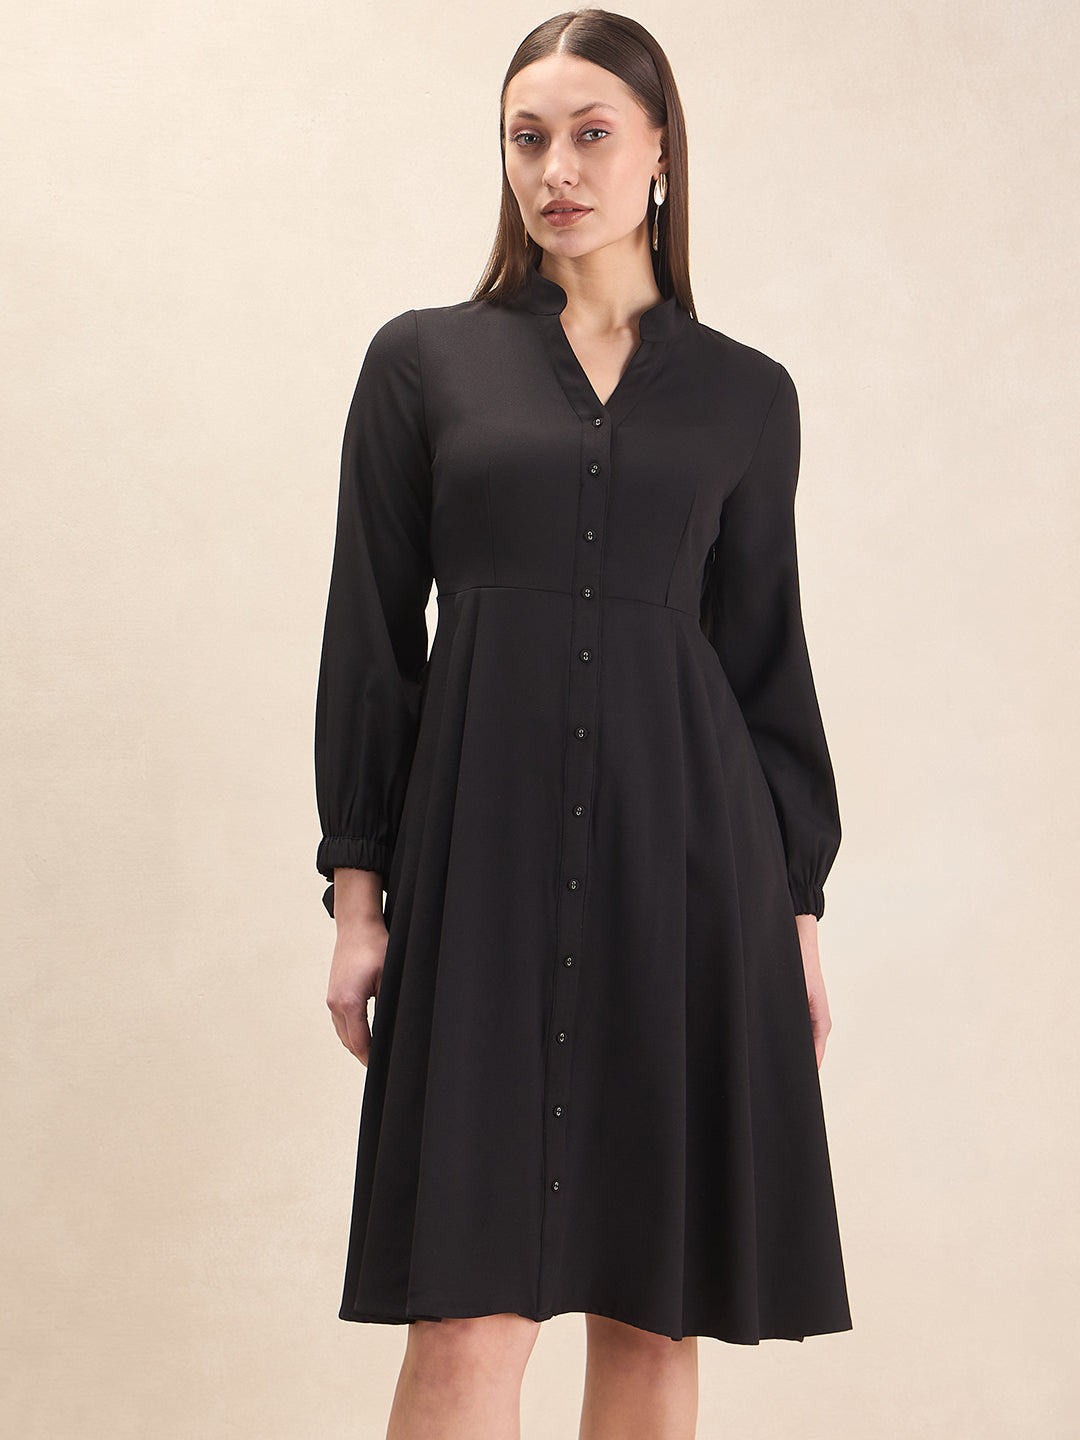 Black Solid Knotted Sleeve Midi Dress